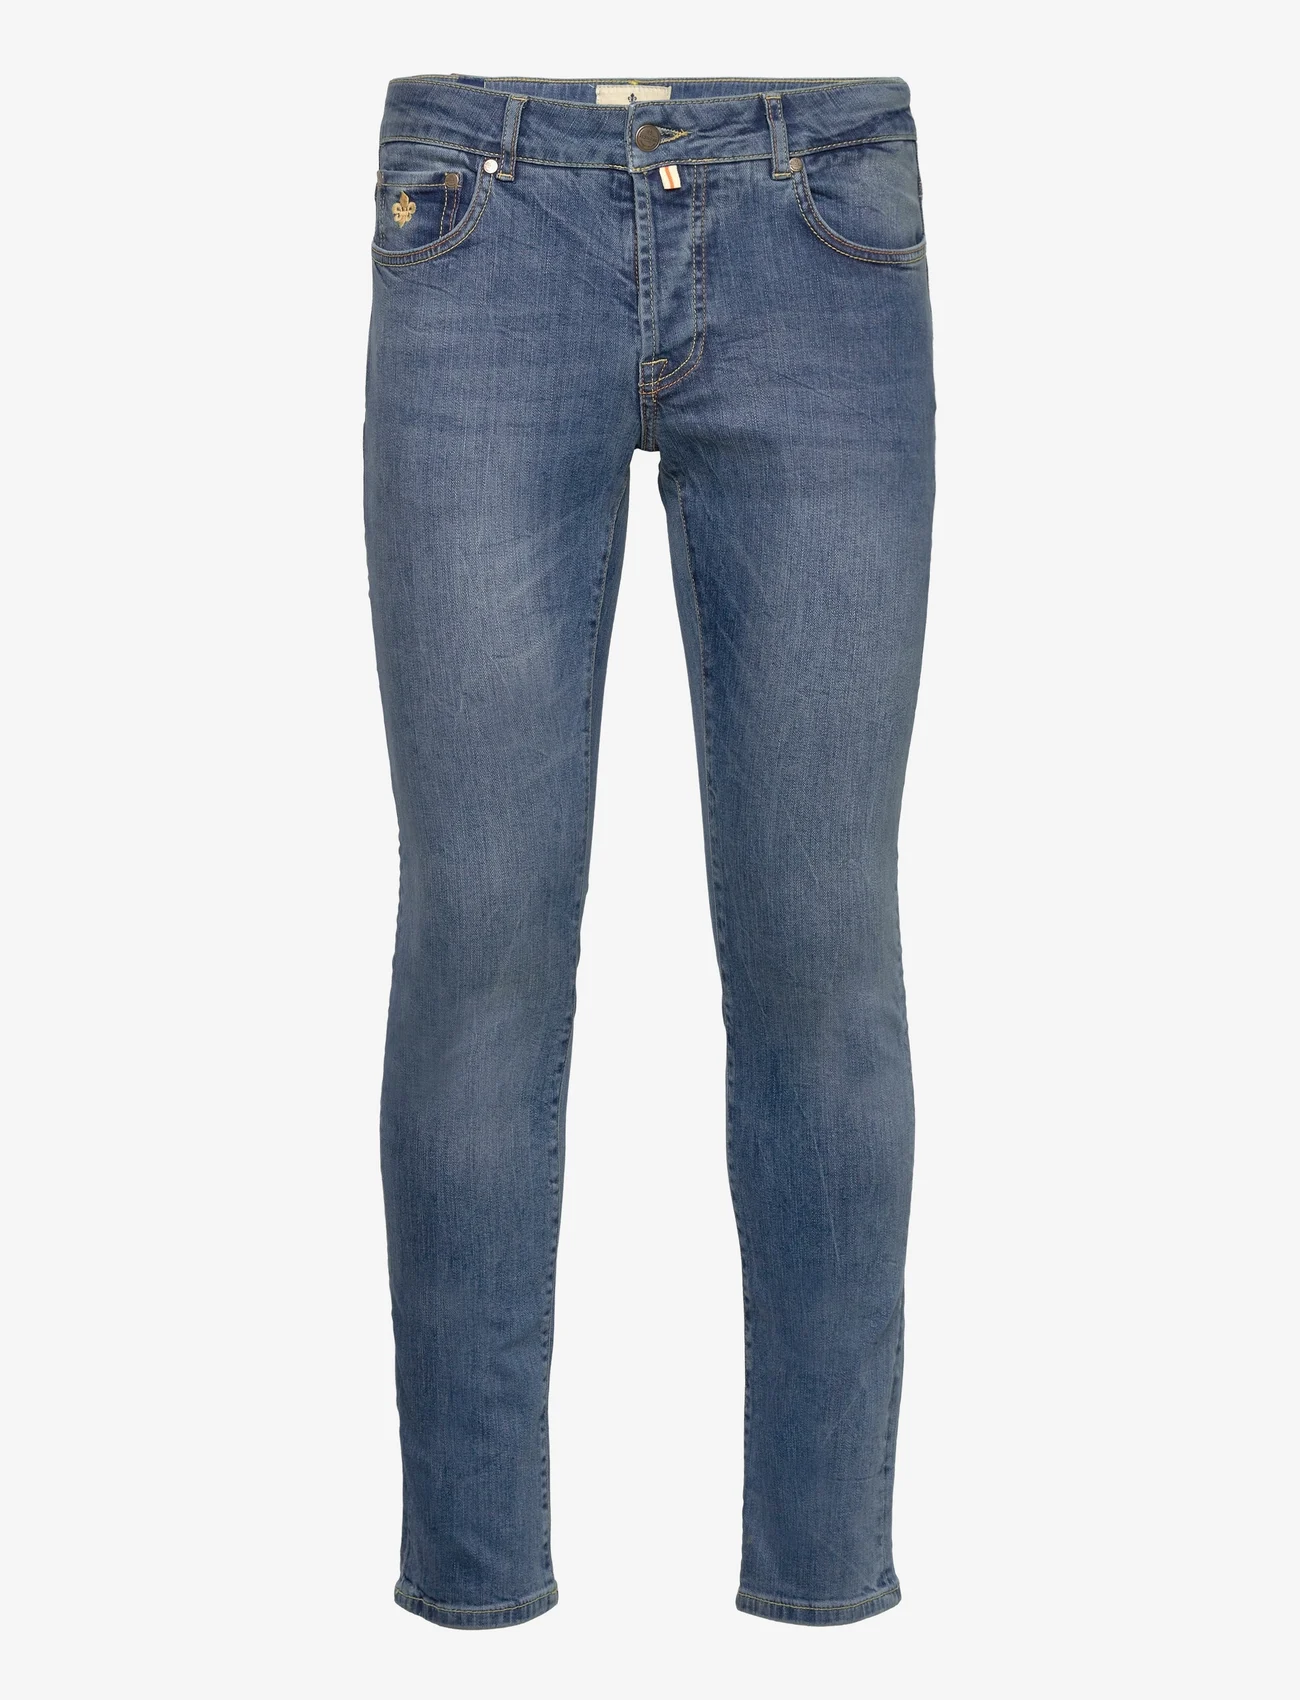 Morris - Steve Jeans - slim jeans - semi dark wash - 0